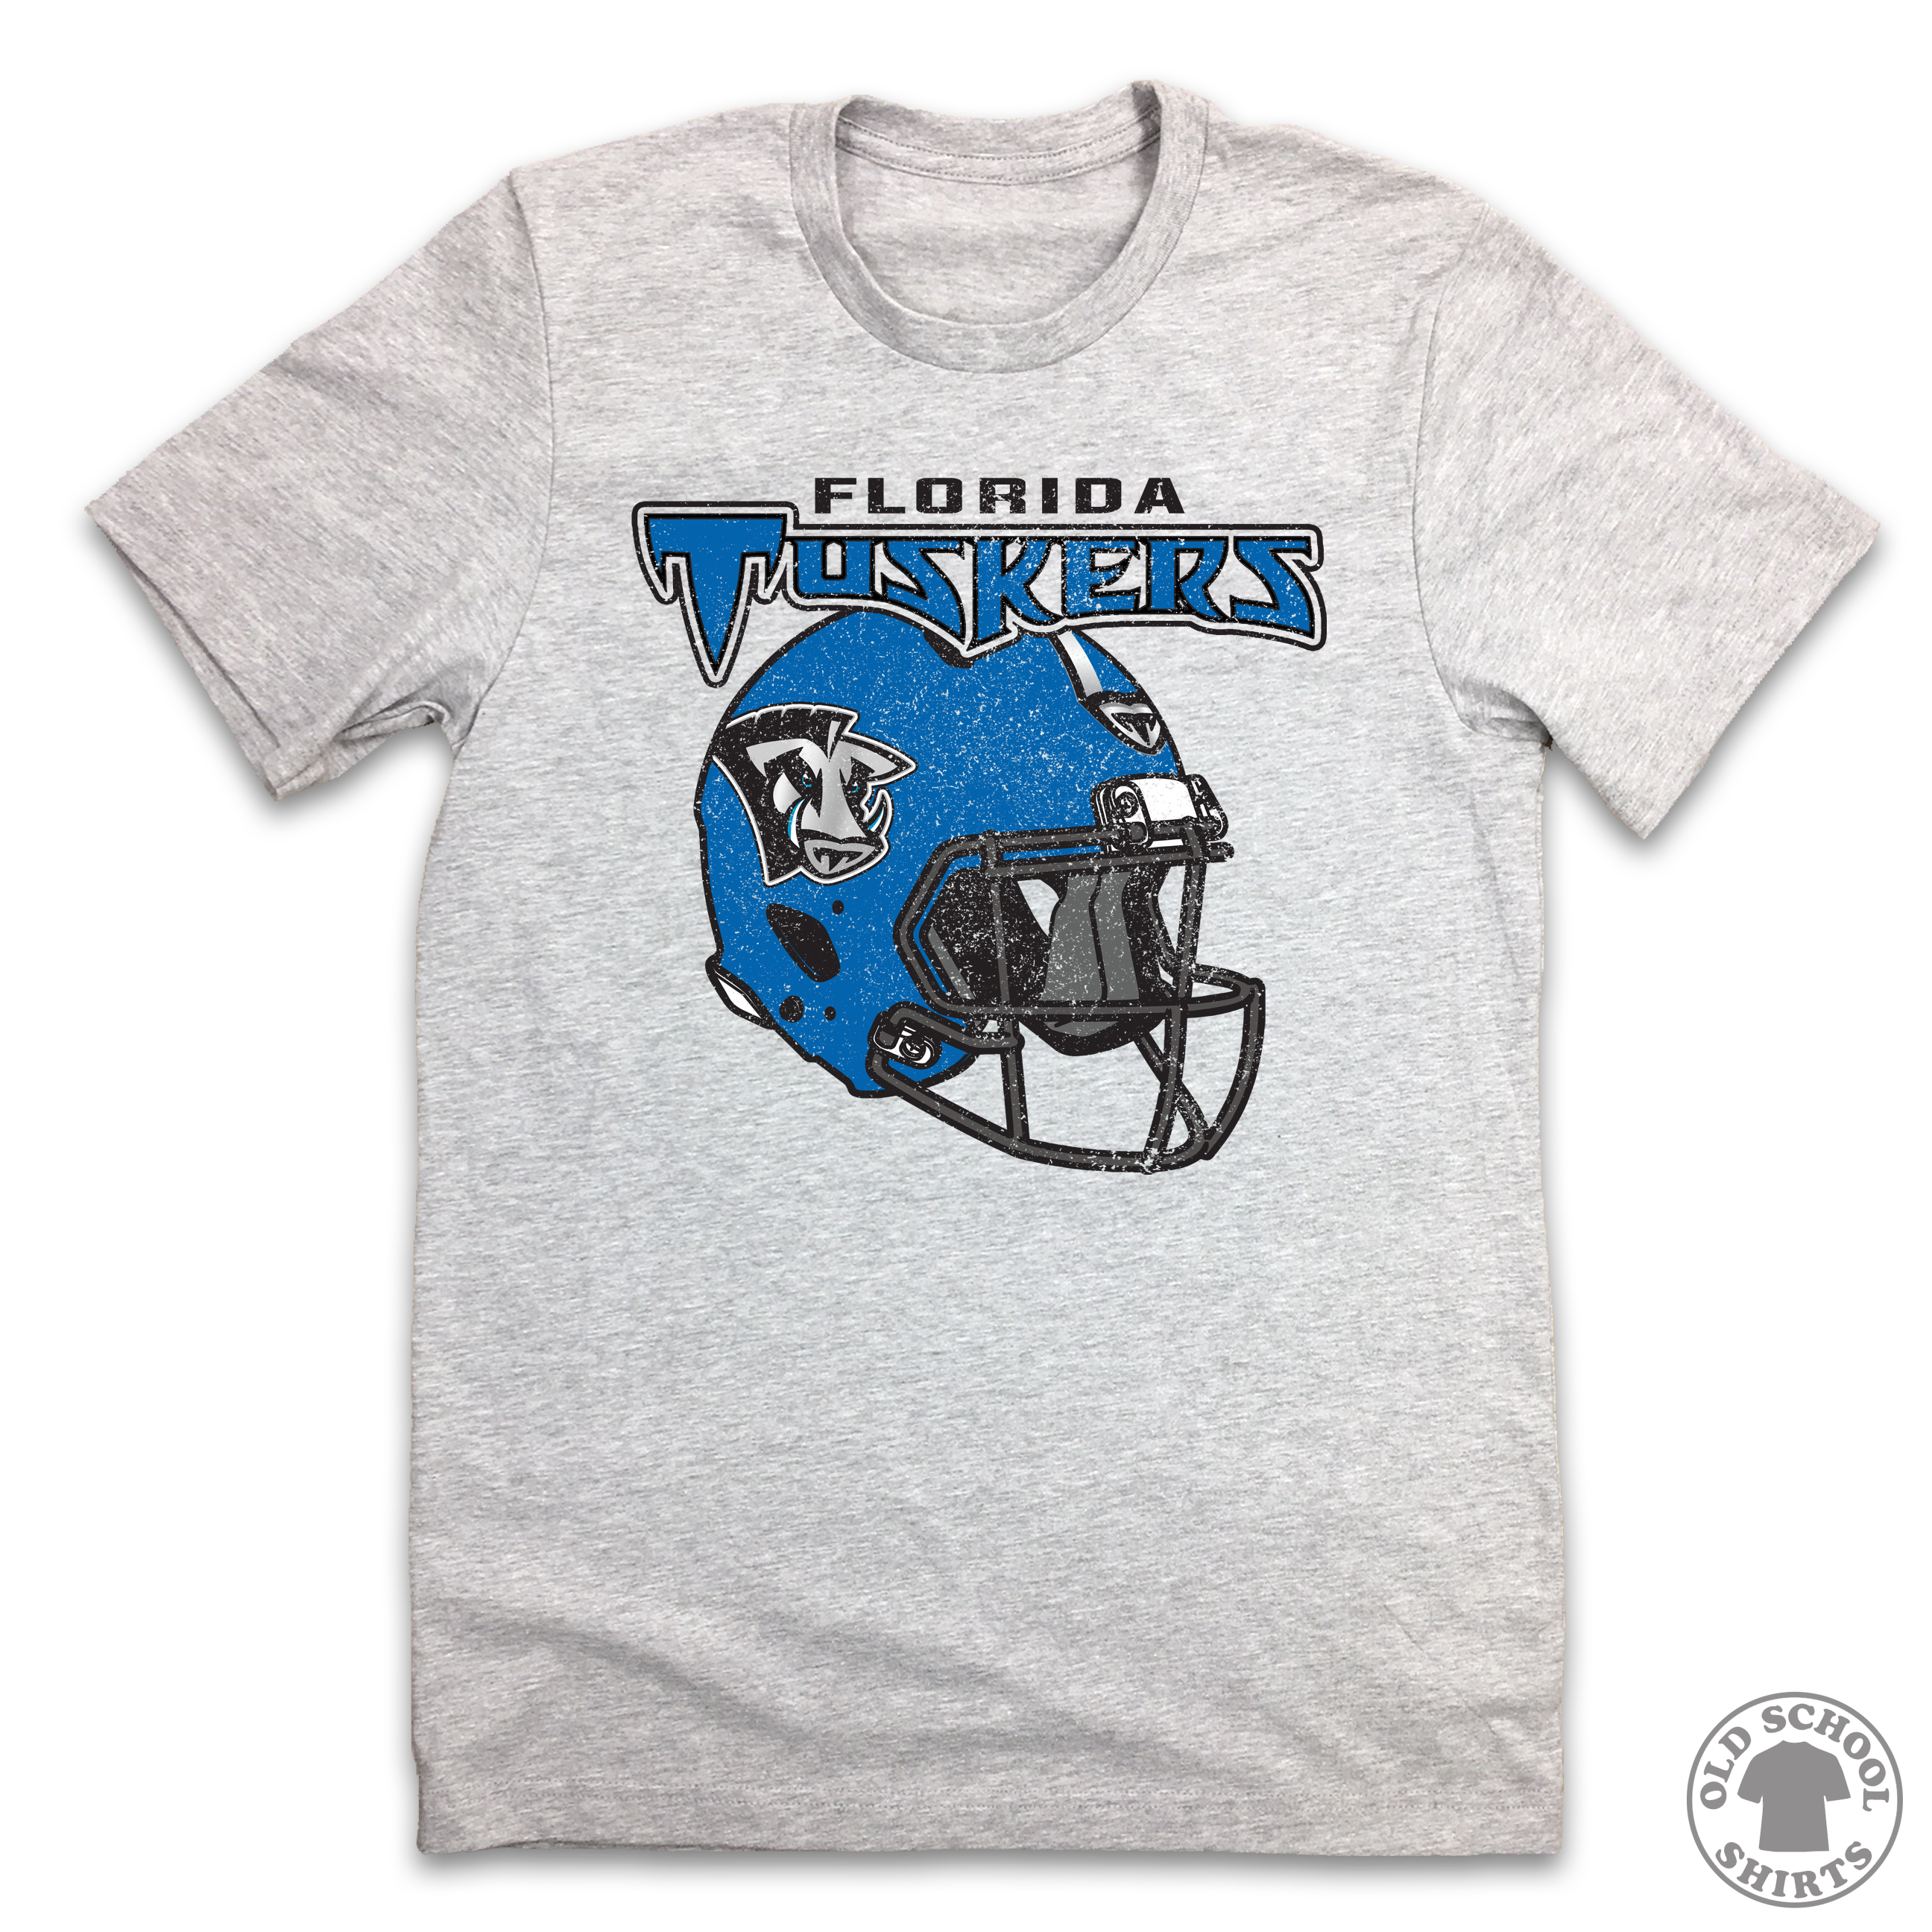 Florida Tuskers Football - Old School Shirts- Retro Sports T Shirts